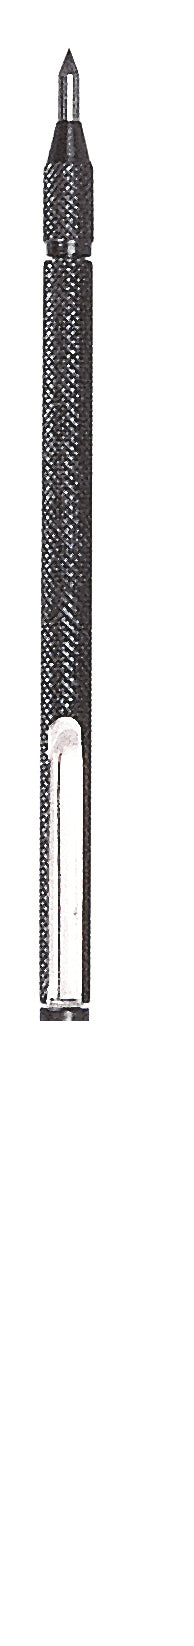 Tungsten Carbide Scriber and Magnet